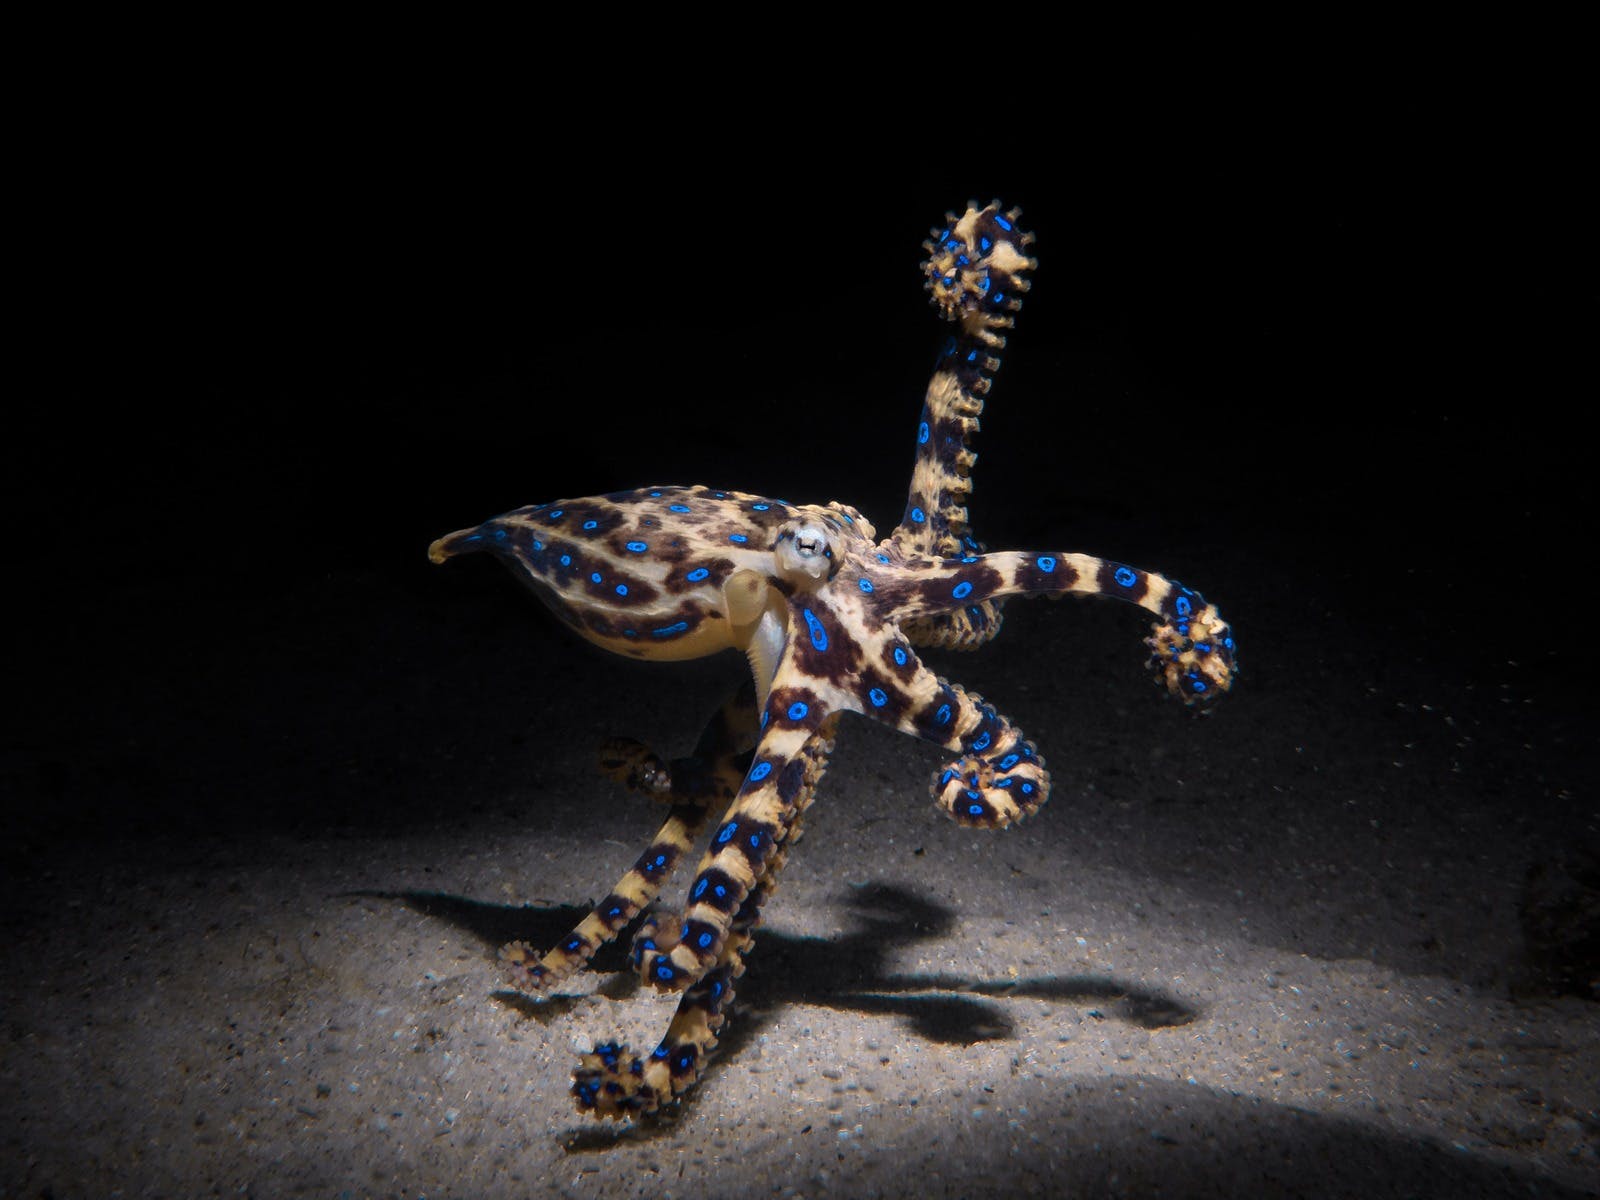 Guided Scuba Dives With Blue Ringed Octopus, Tour, Mornington Peninsula, Victoria, Australia